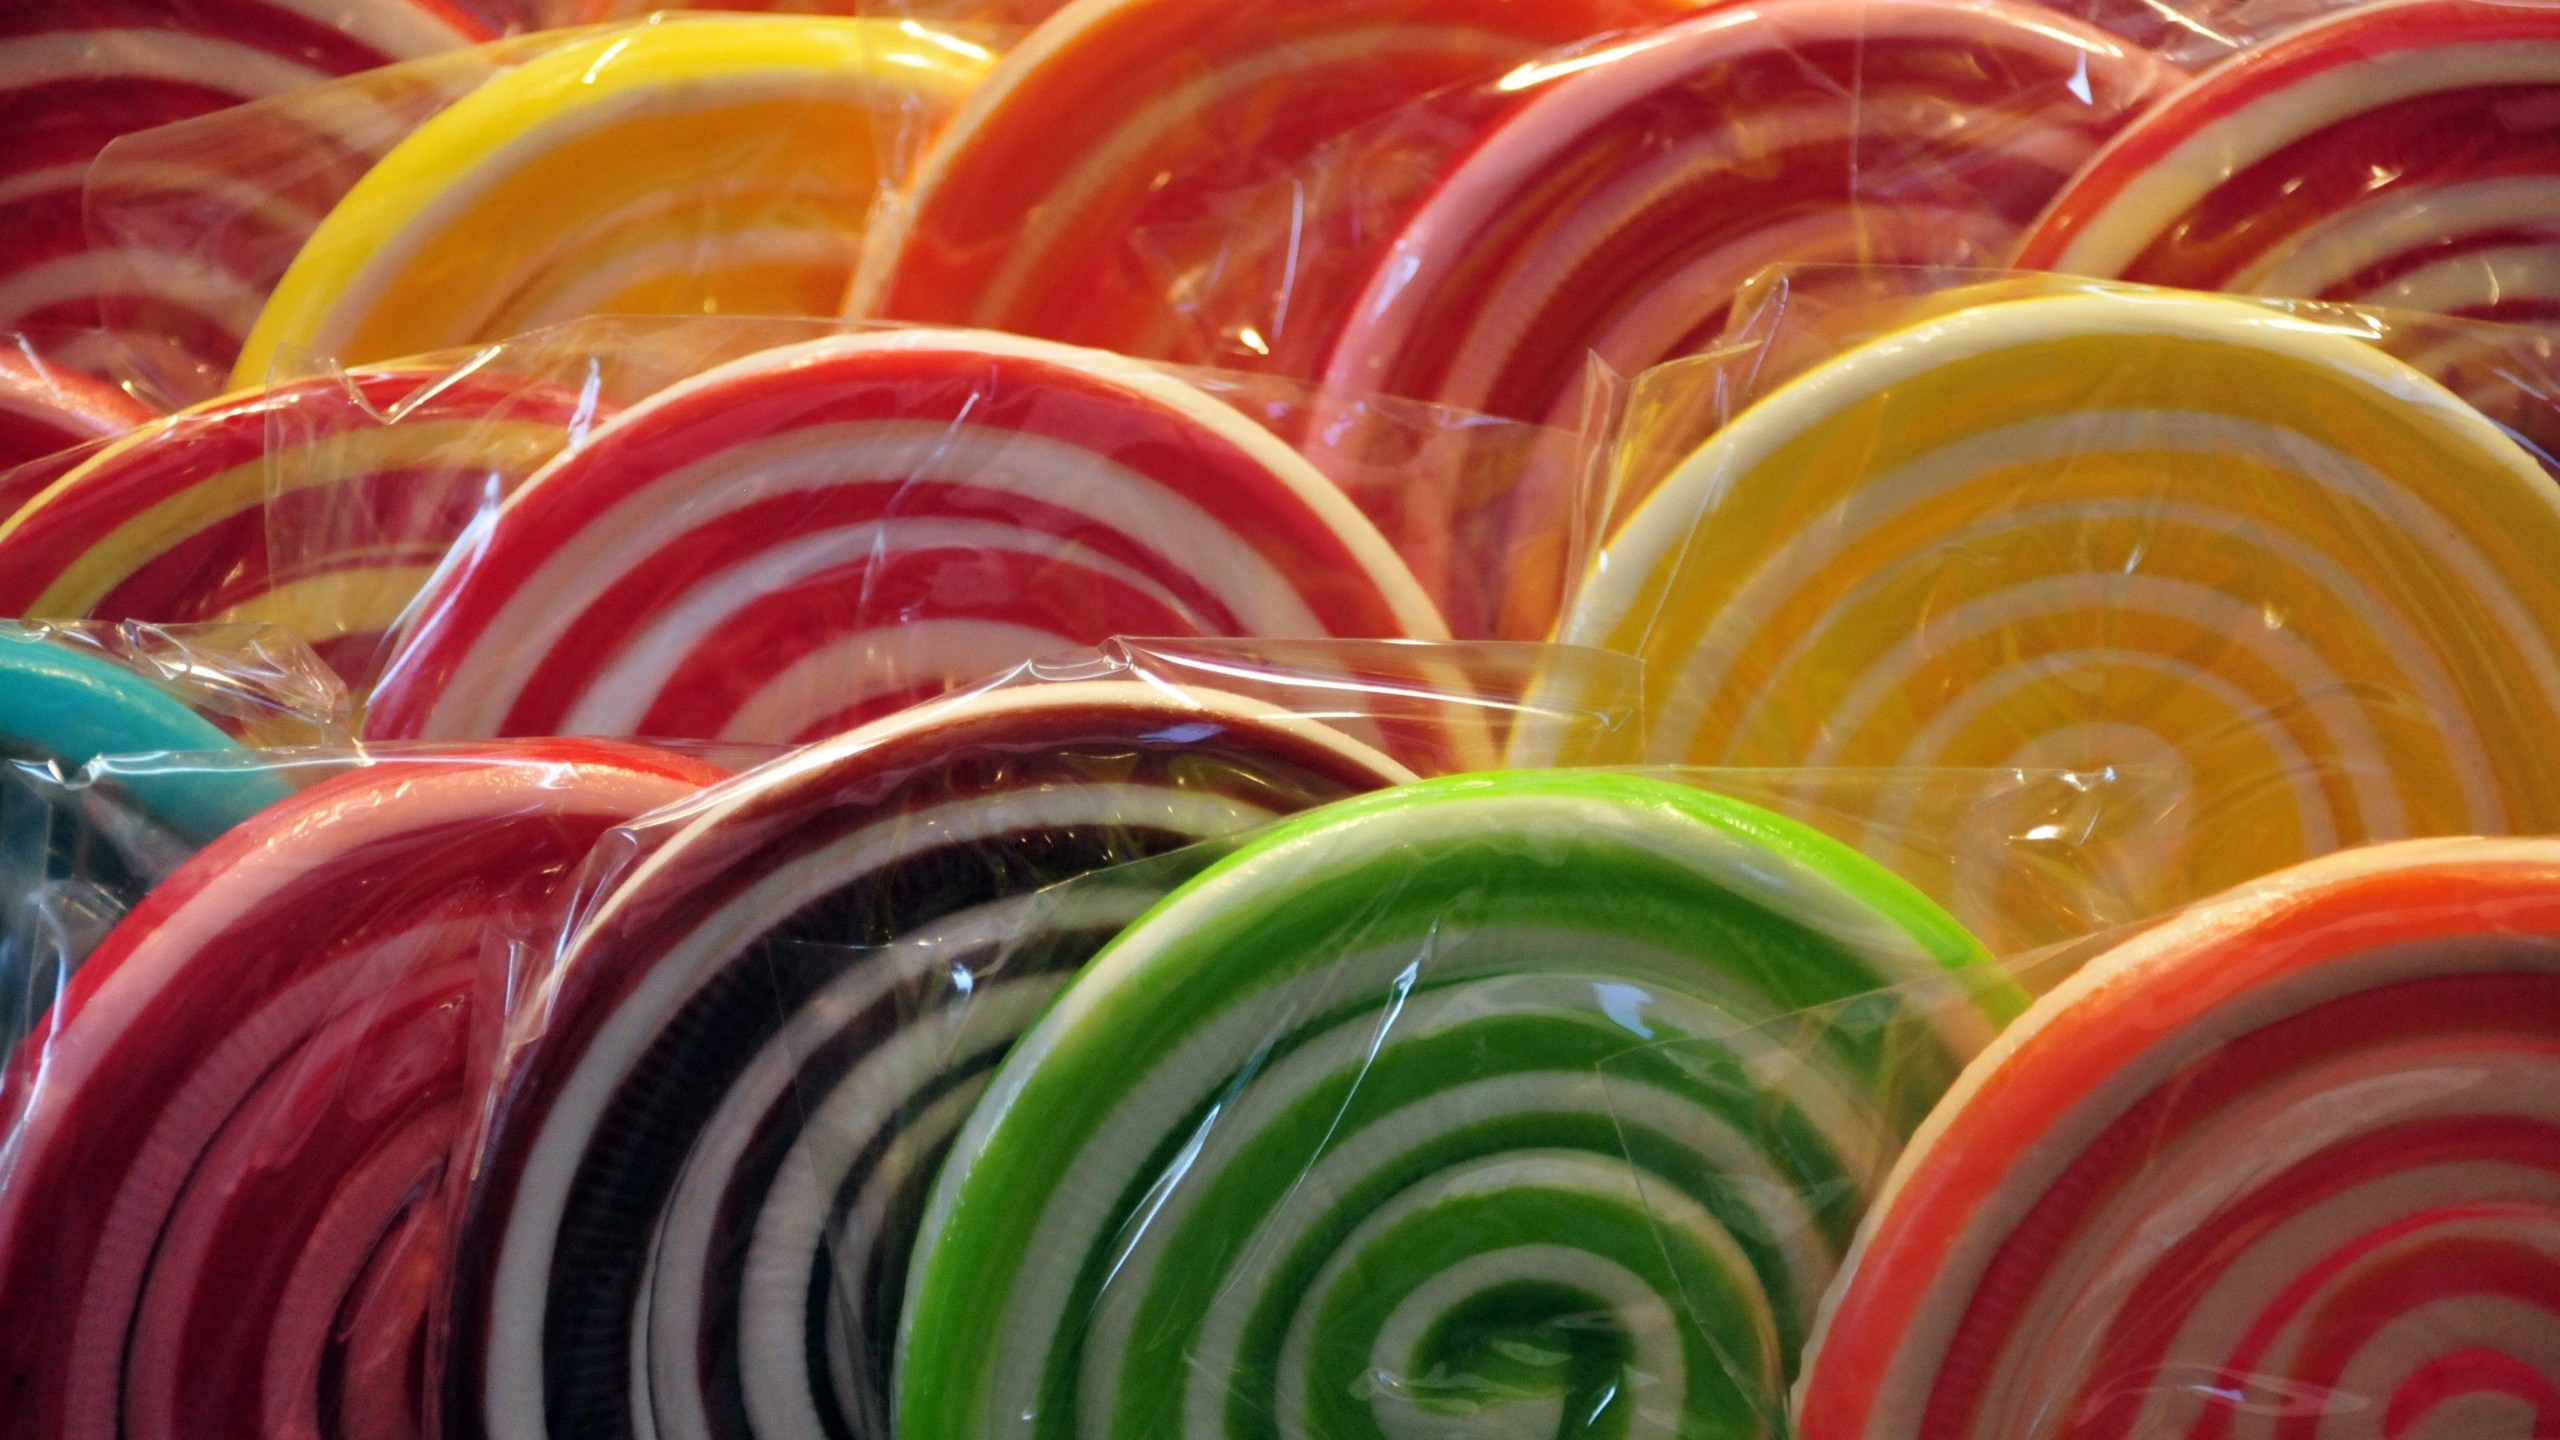 2560x1440 Lollipop Candy Wallpaper Background 62466